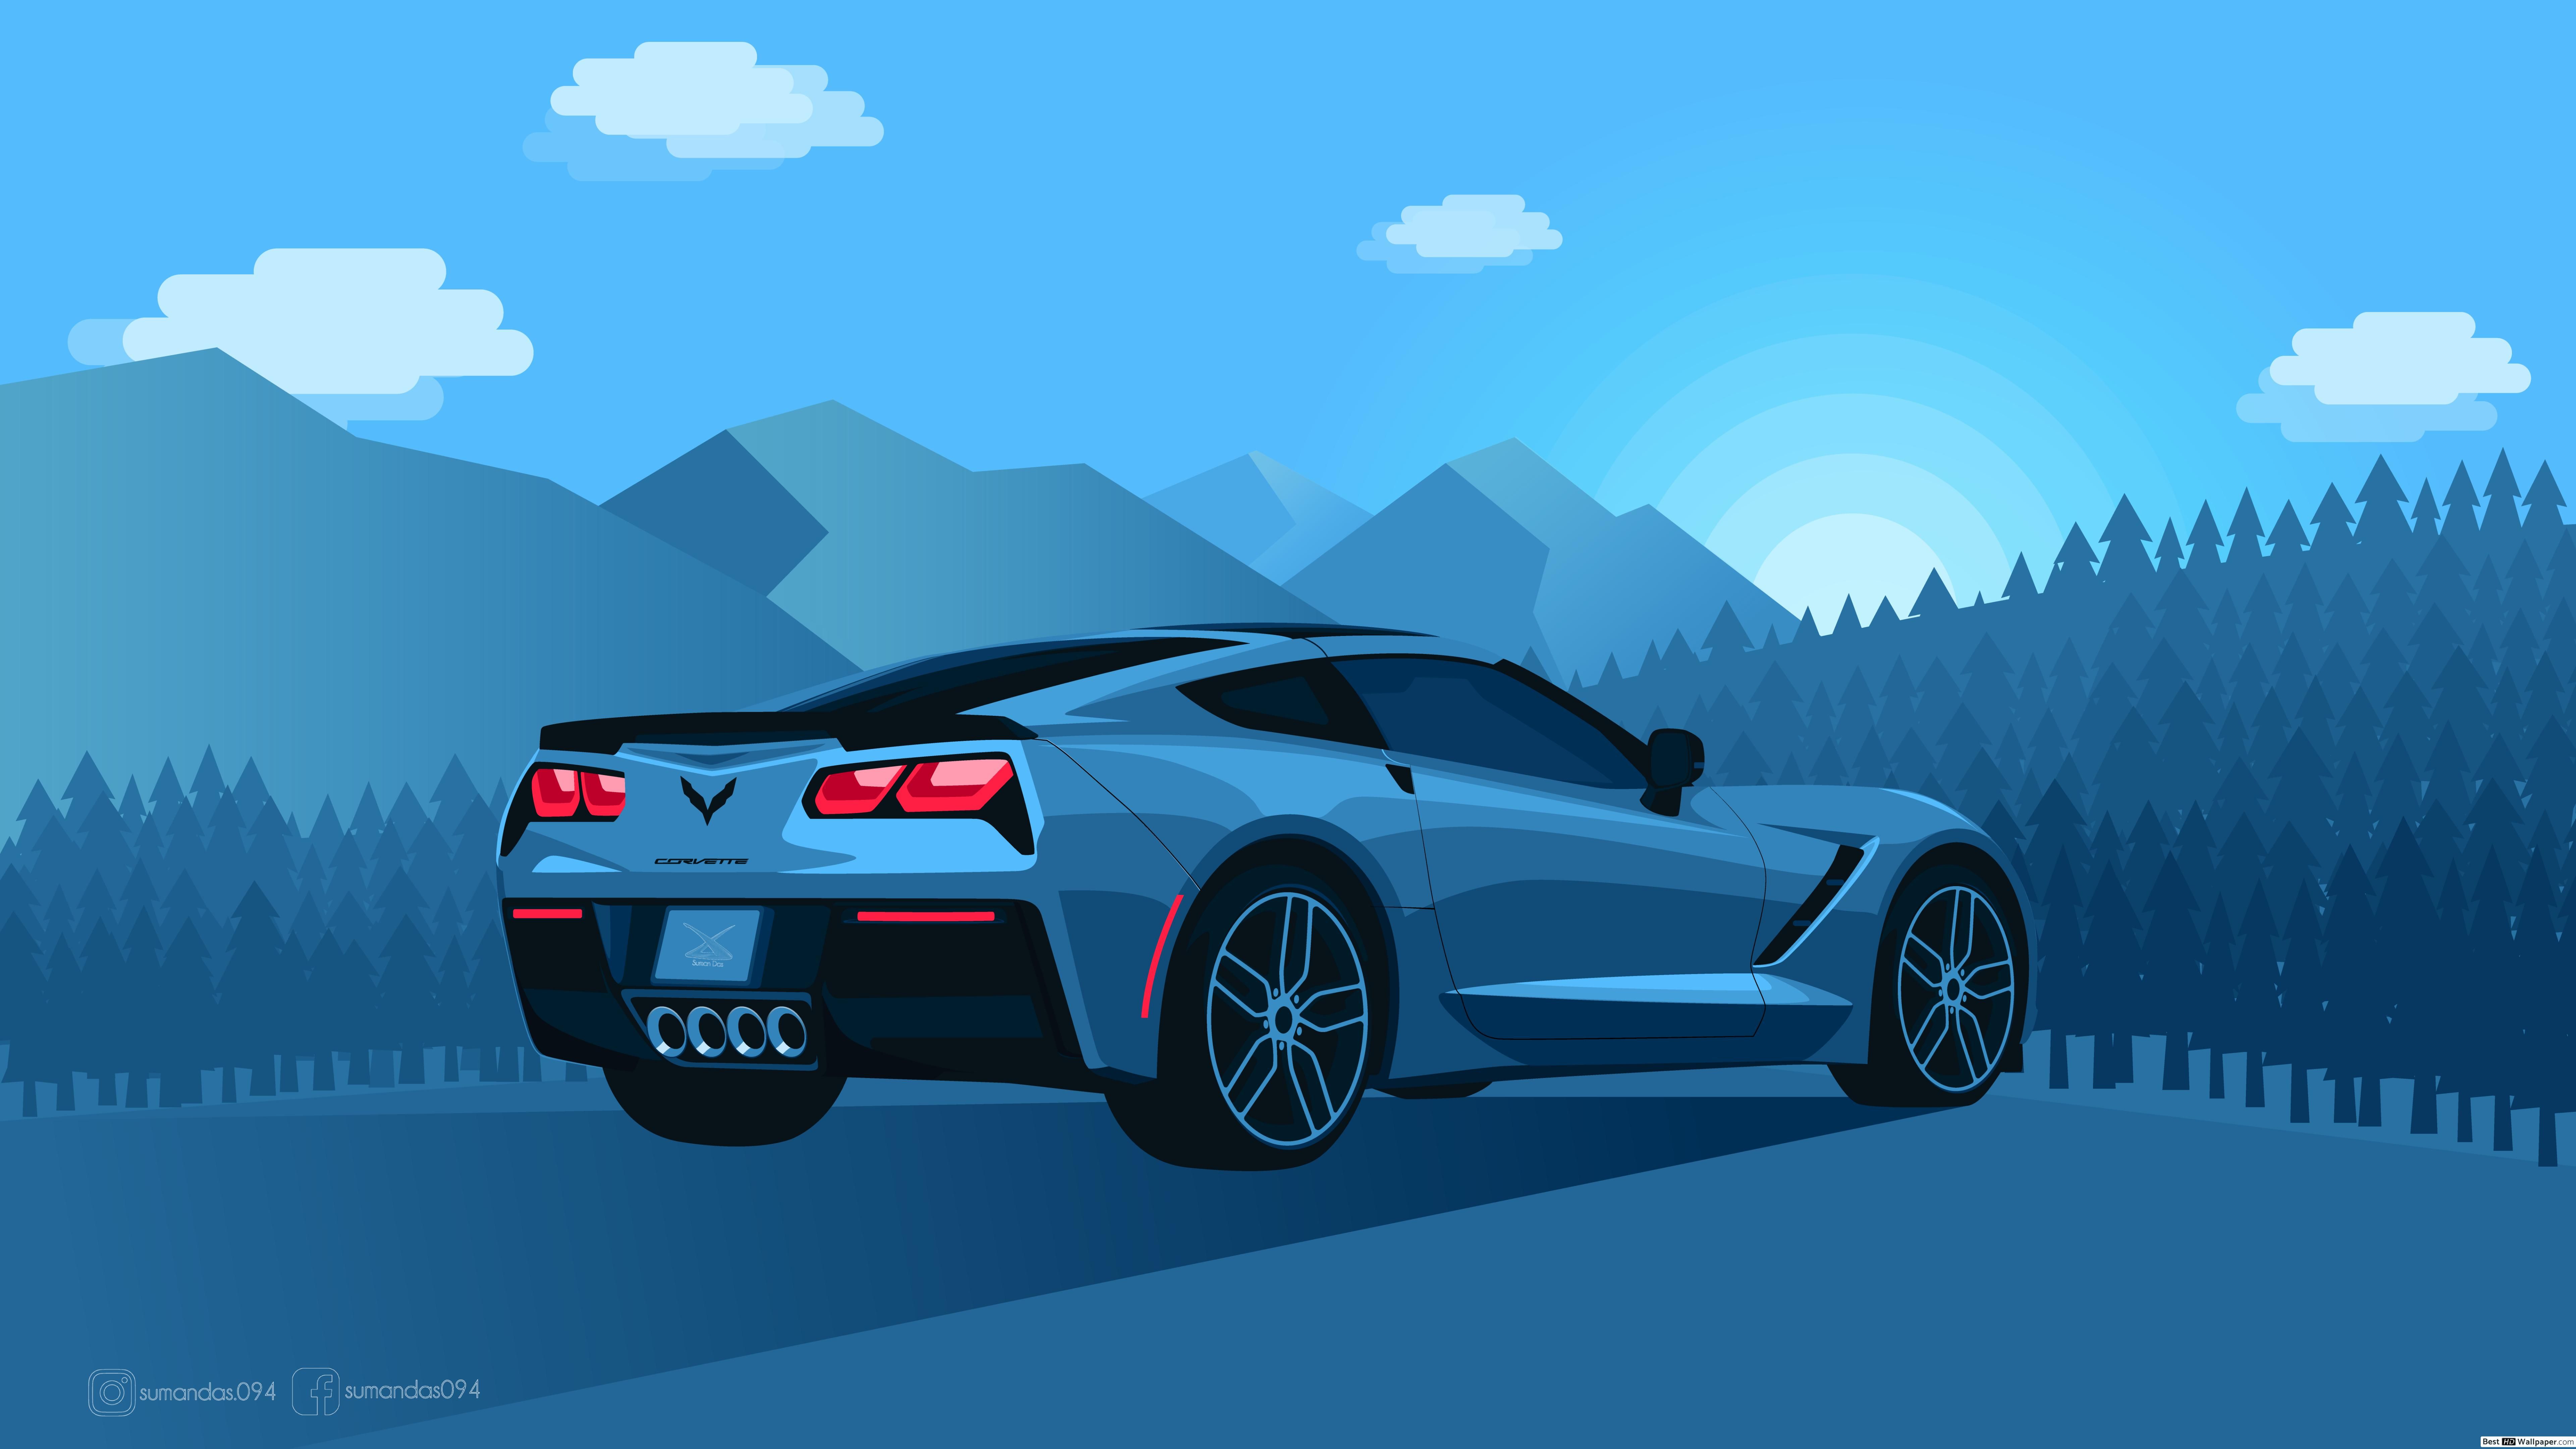 Blue Chevrolet Corvette artistic minimalist wallpaper HD wallpaper download